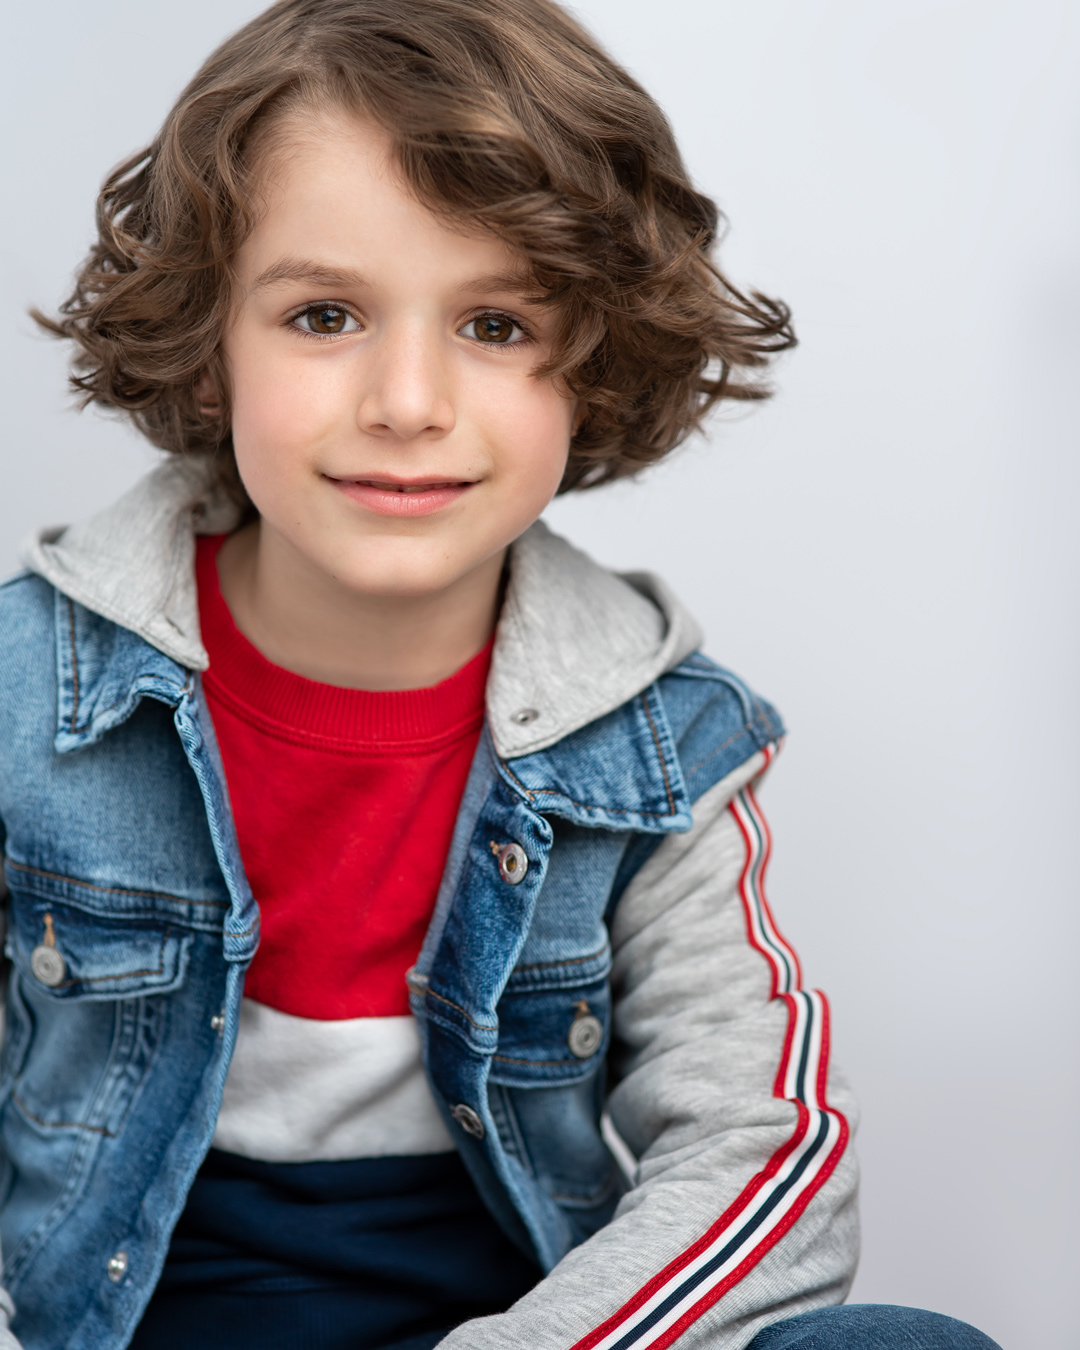 Child actor Azriel Dalman headshot